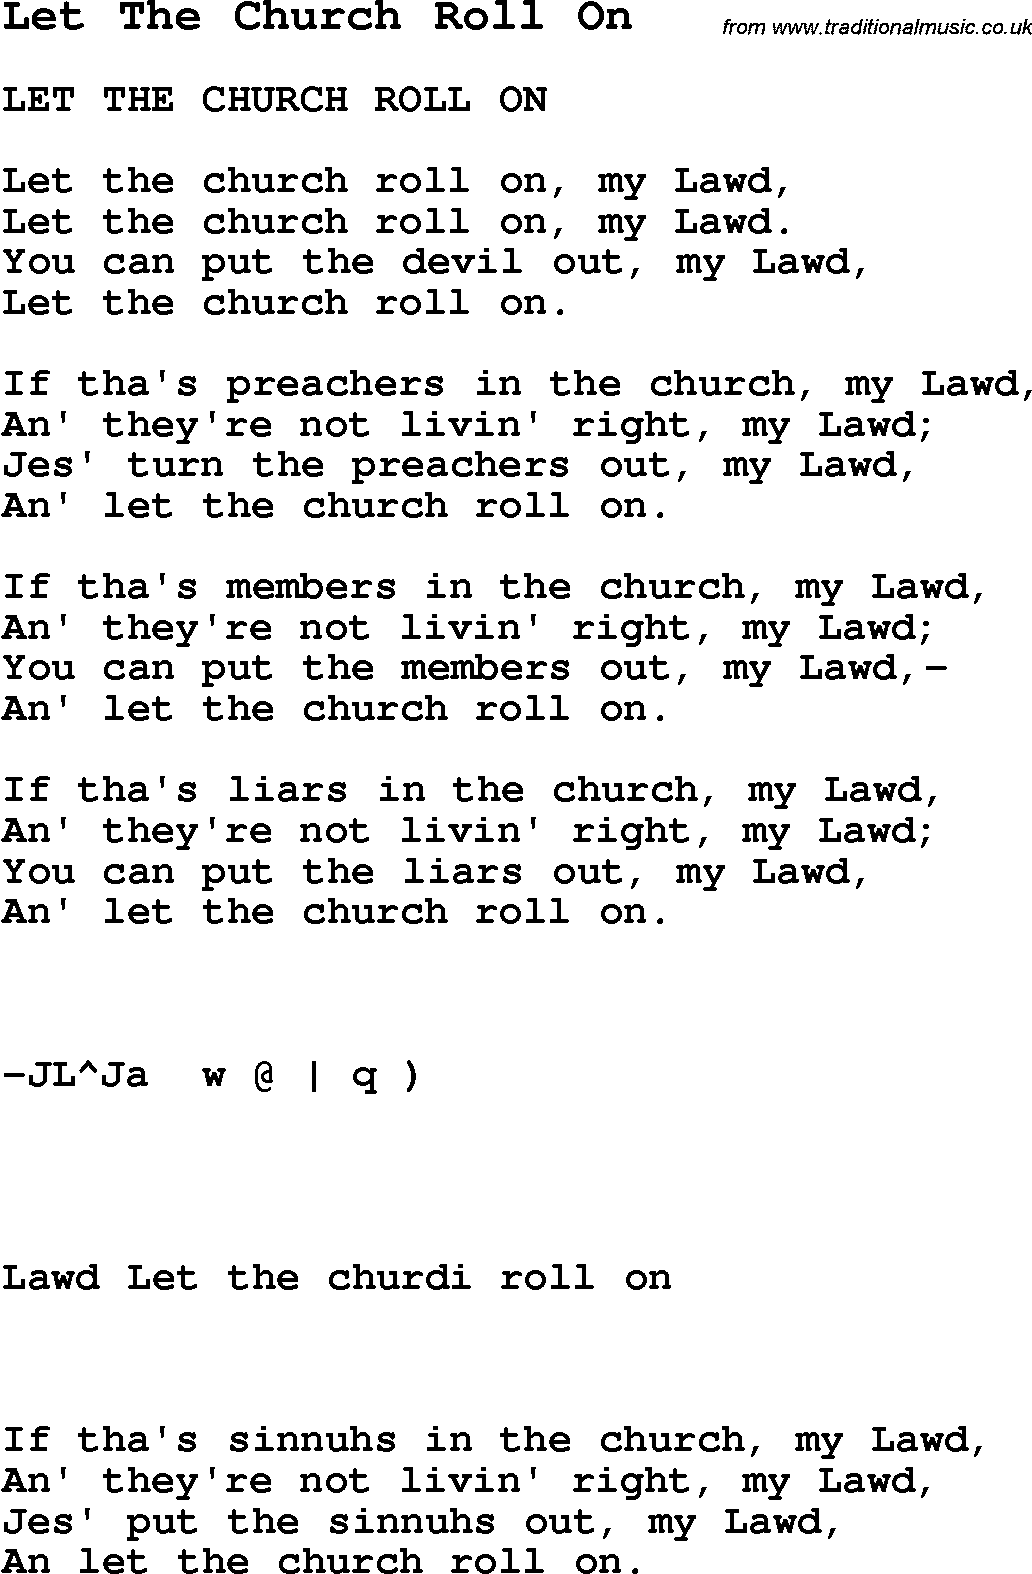 Negro Spiritual Song Lyrics for Let The Church Roll On